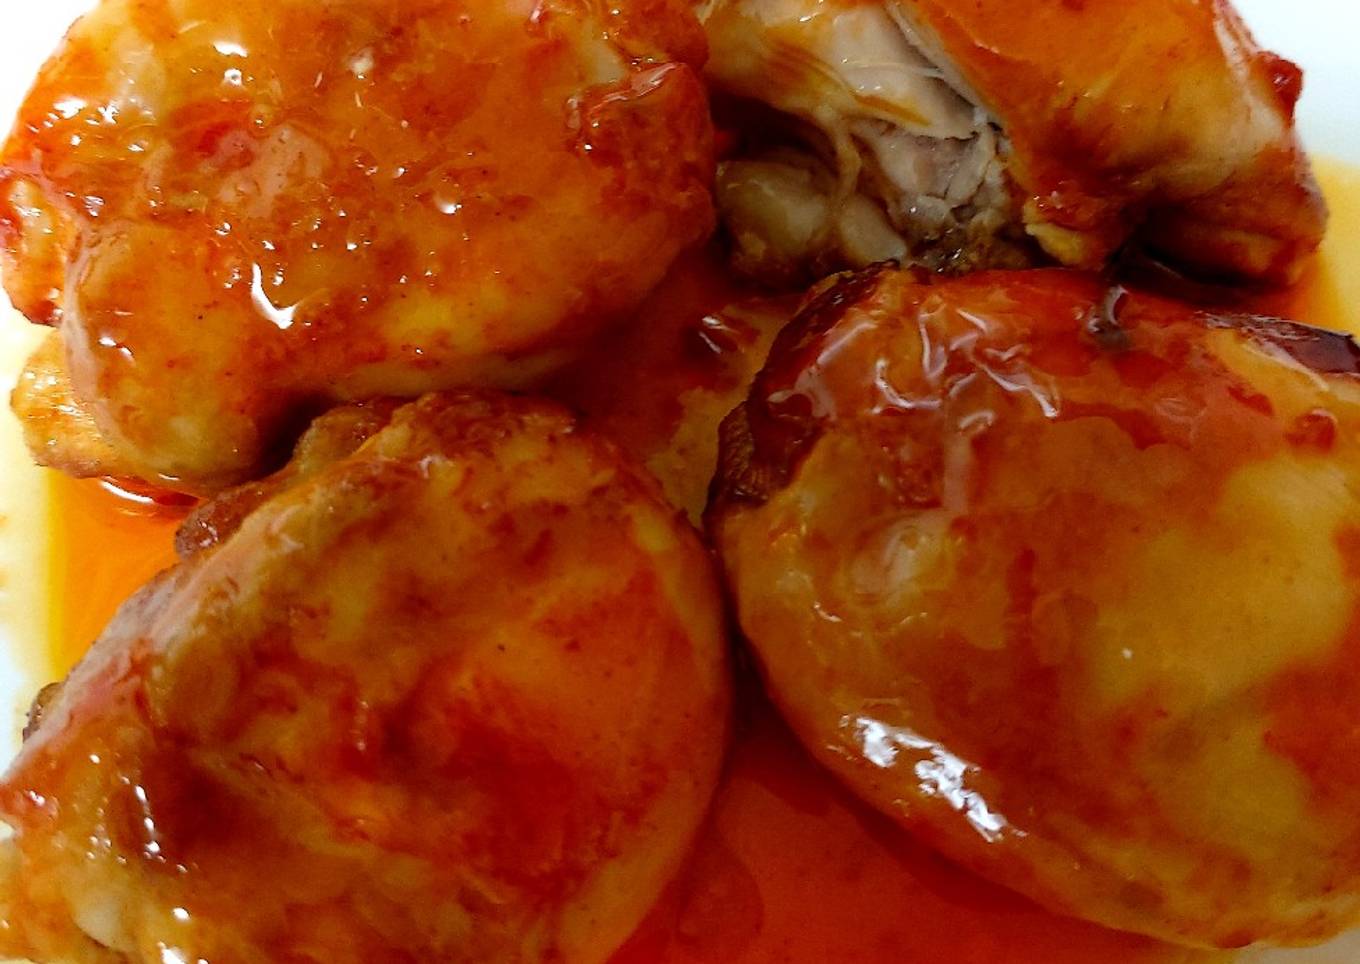 My Airfried Red Hot Tasty Chicken Thighs 😋